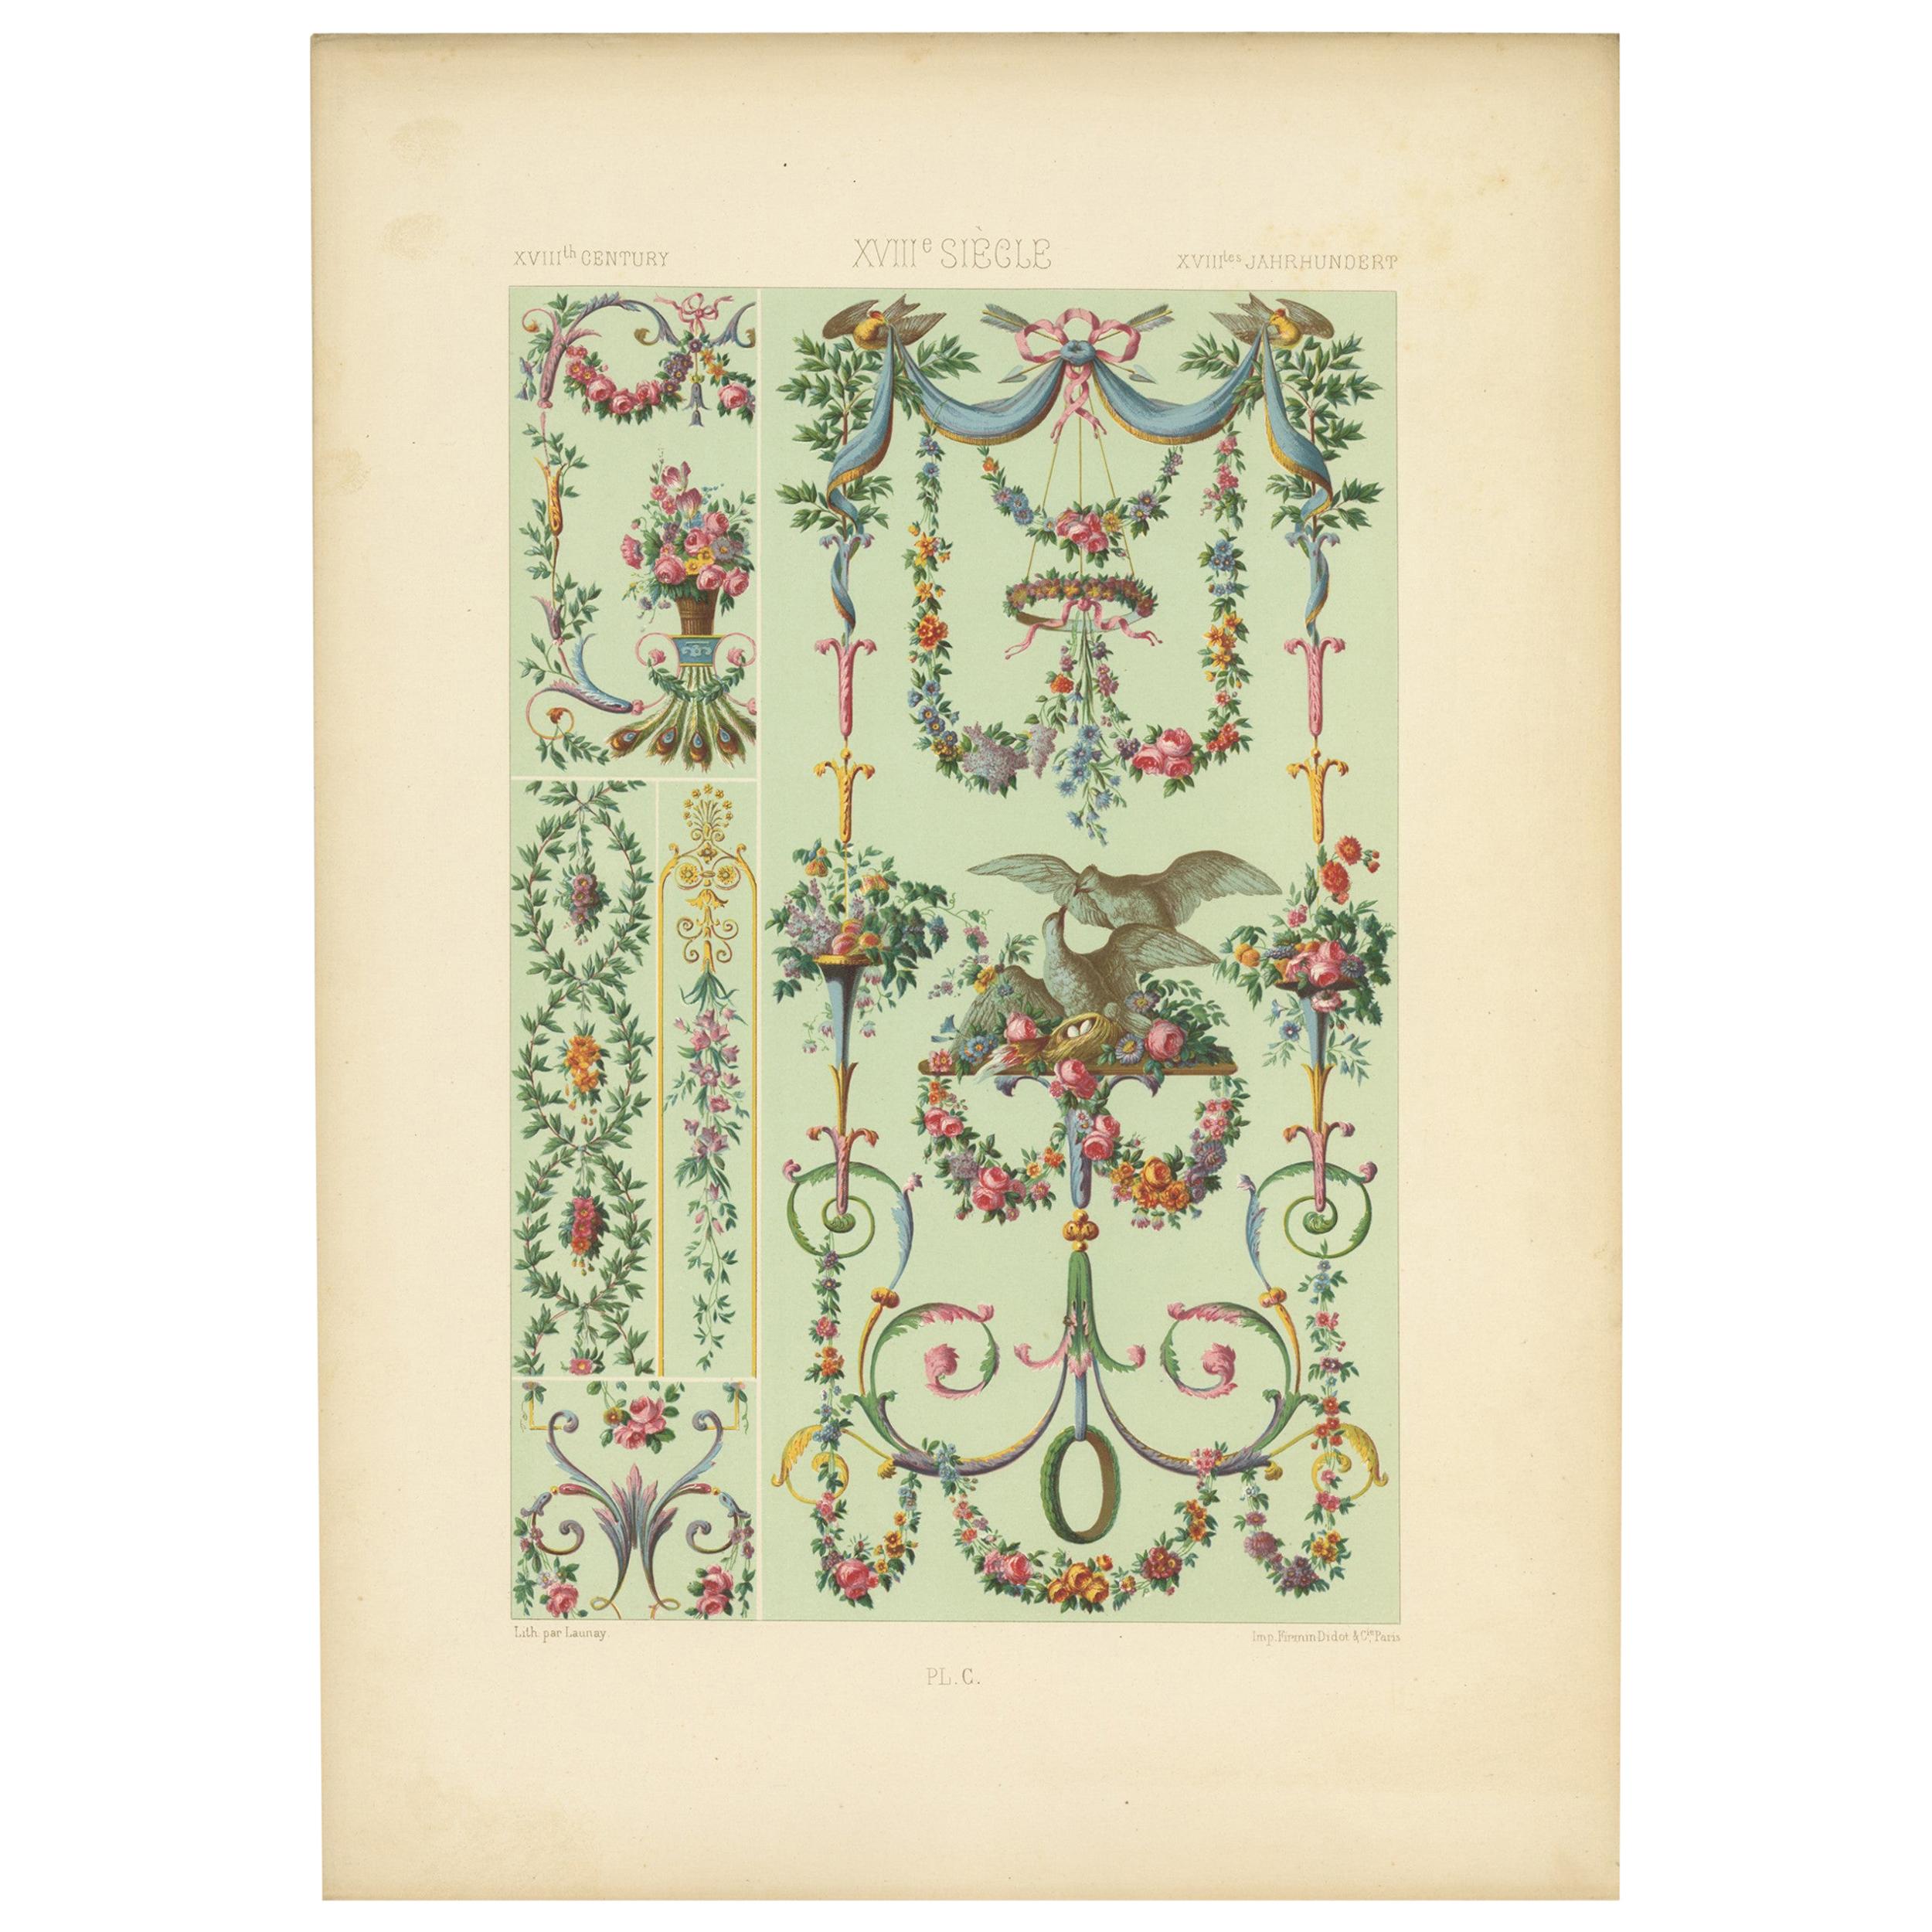 Pl. 100 Antique Print of XVIIIth Century Ornaments by Racinet (c.1890)